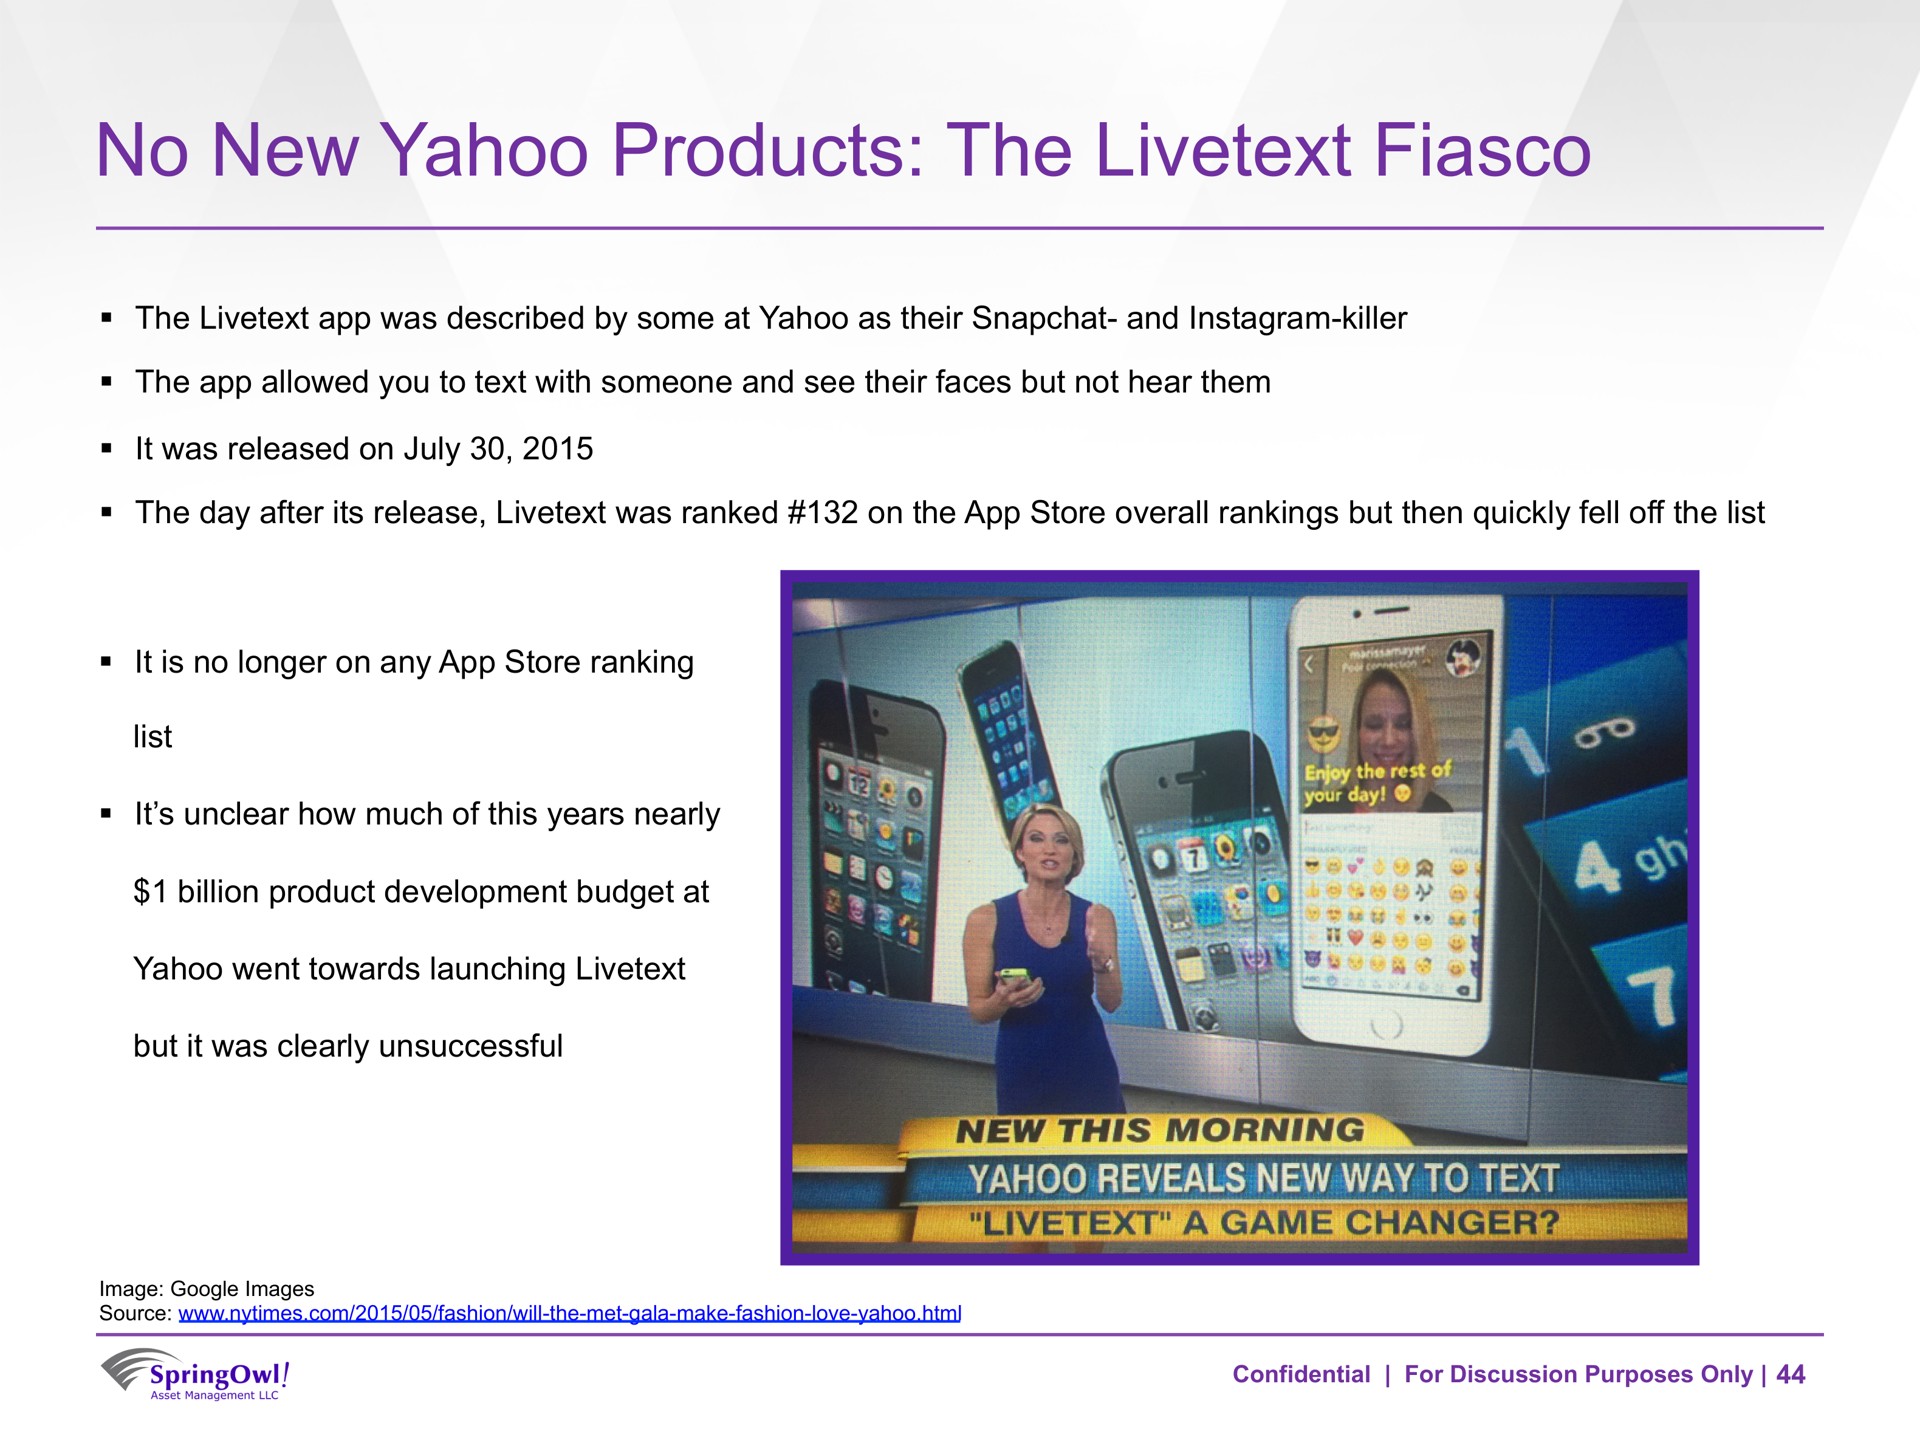 no new yahoo products the fiasco | SpringOwl